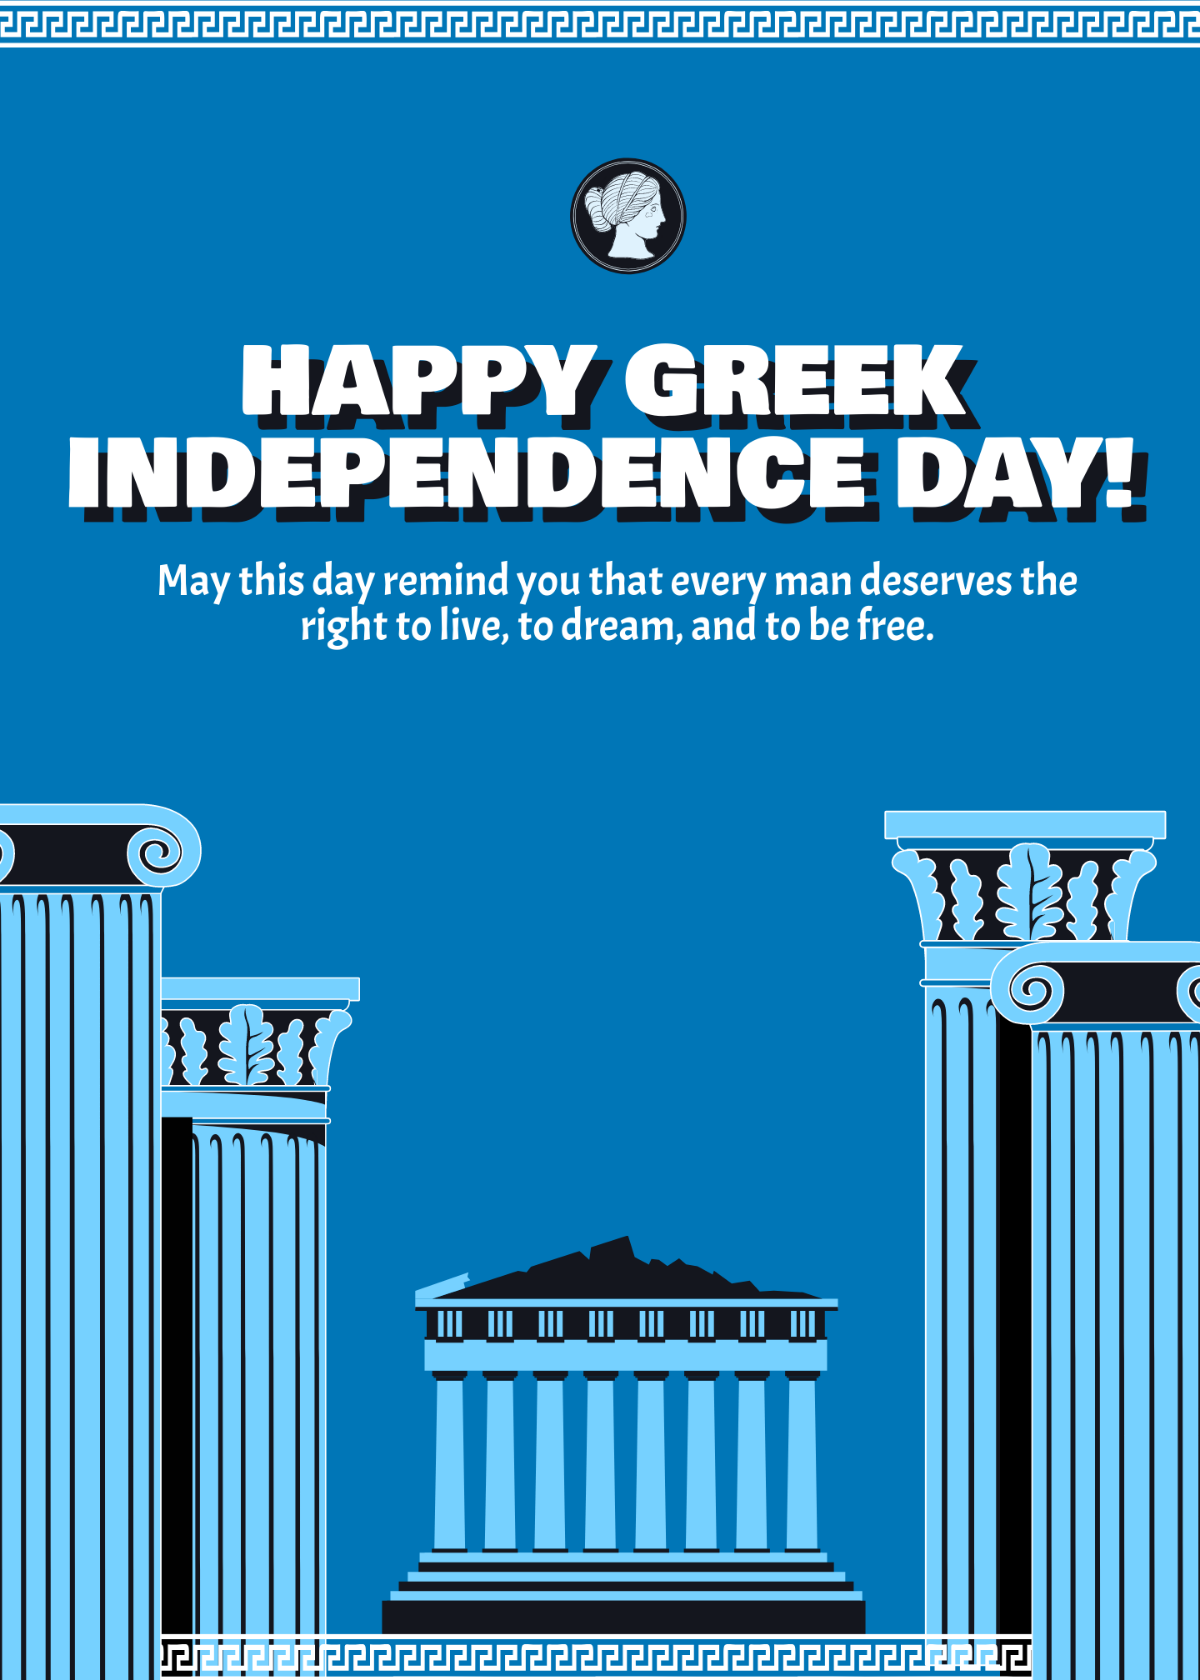 Greek Independence Day Greeting